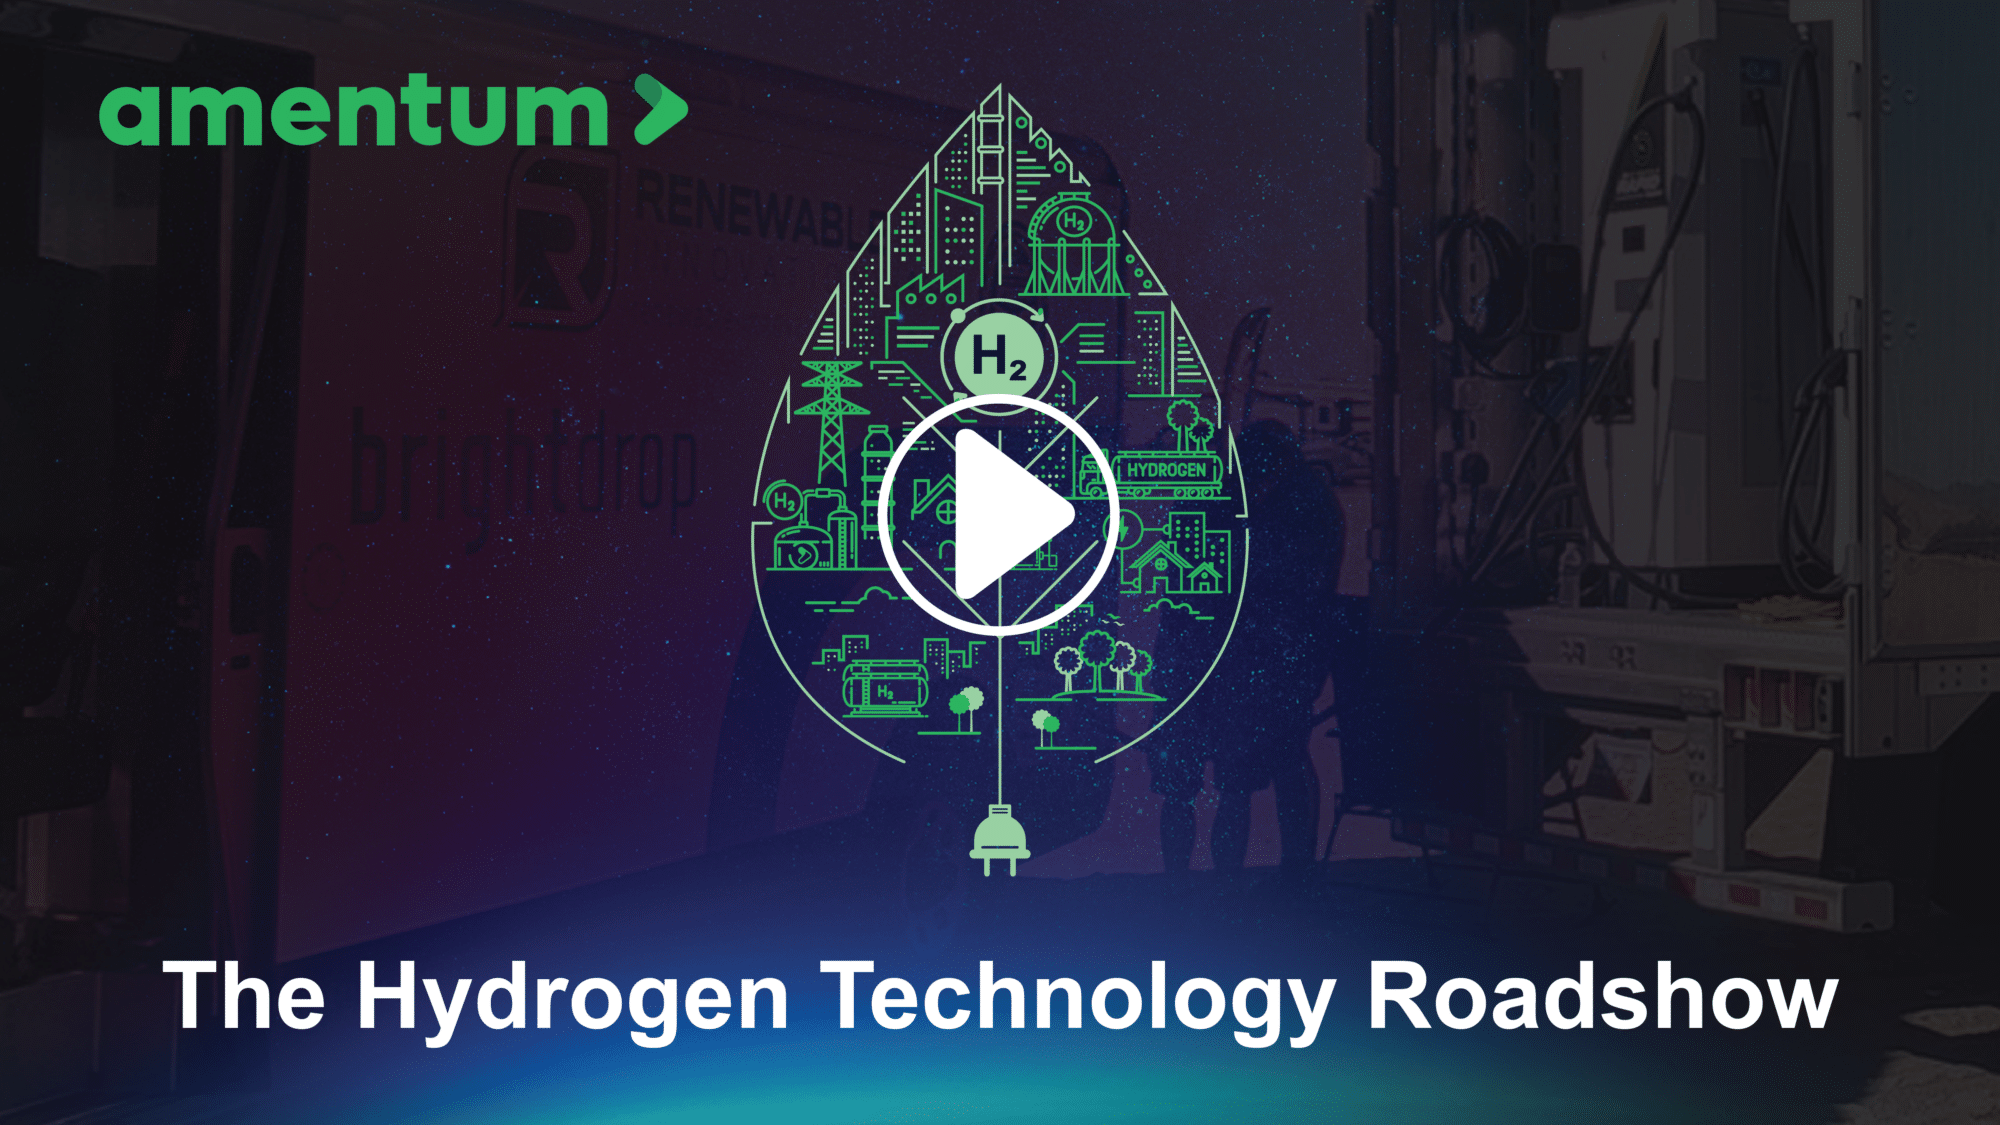 Amentum - The Hydrogen Technology Roadshow